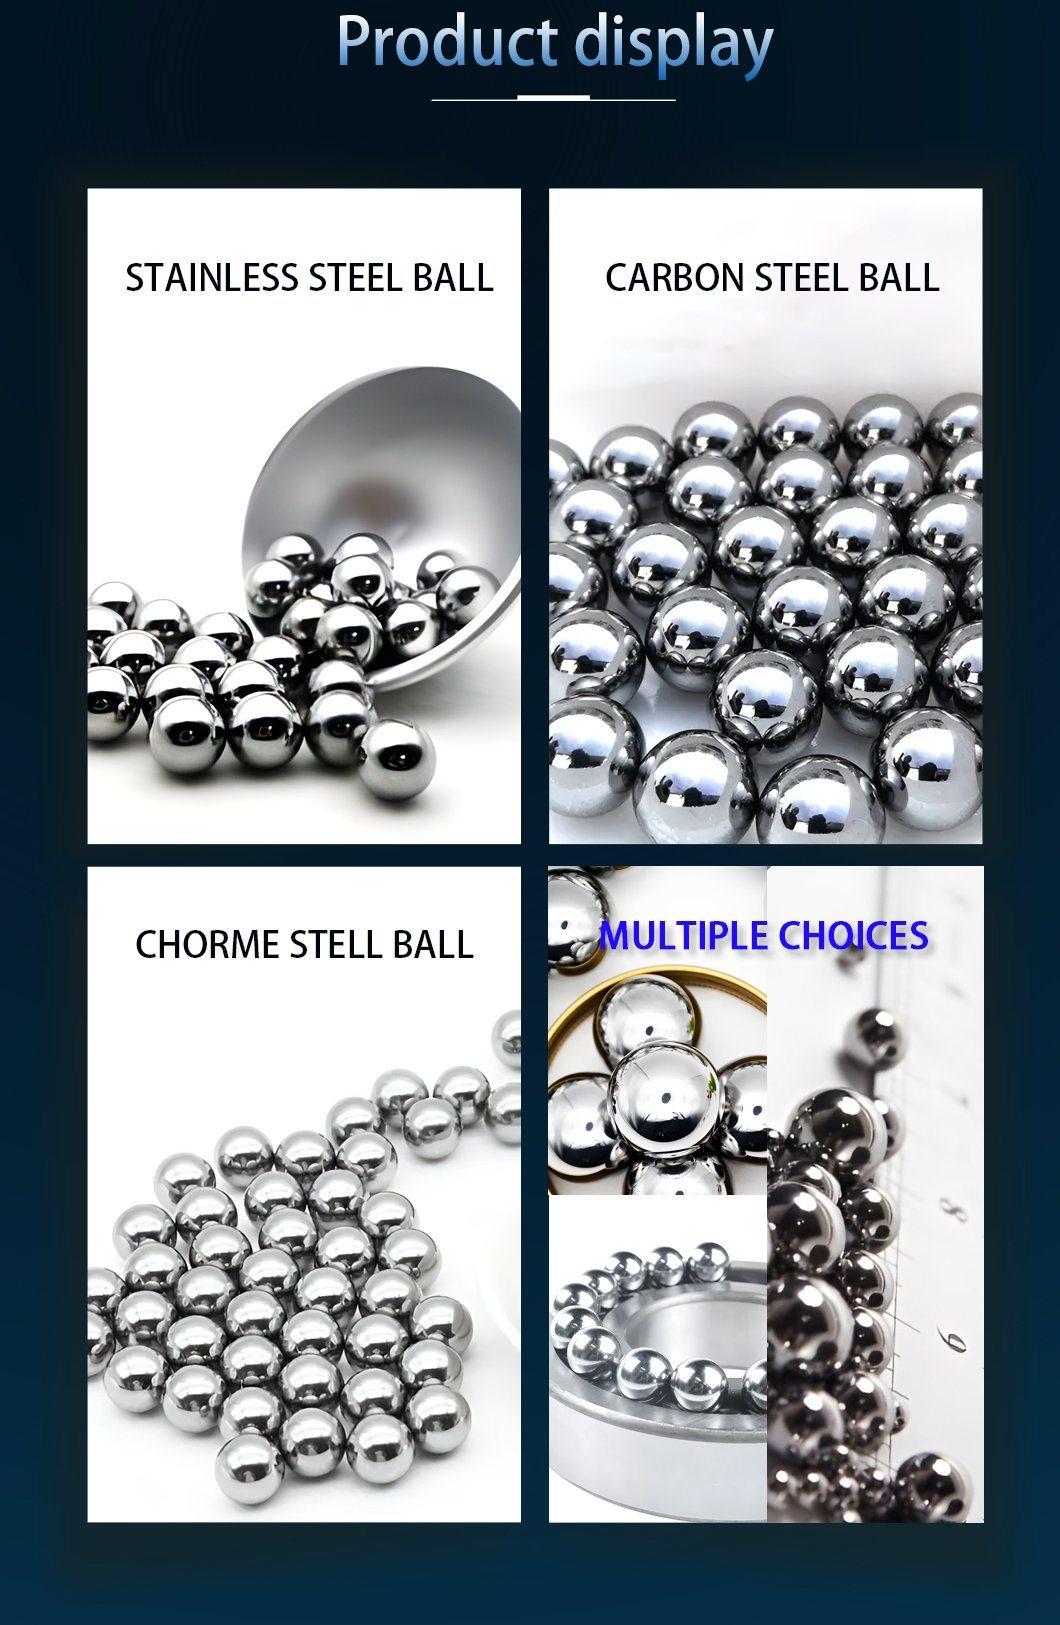 3mm 8mm 9.85mm 10mm Stainless Steel Roller Ball 4mm Steel Balls for Bearing